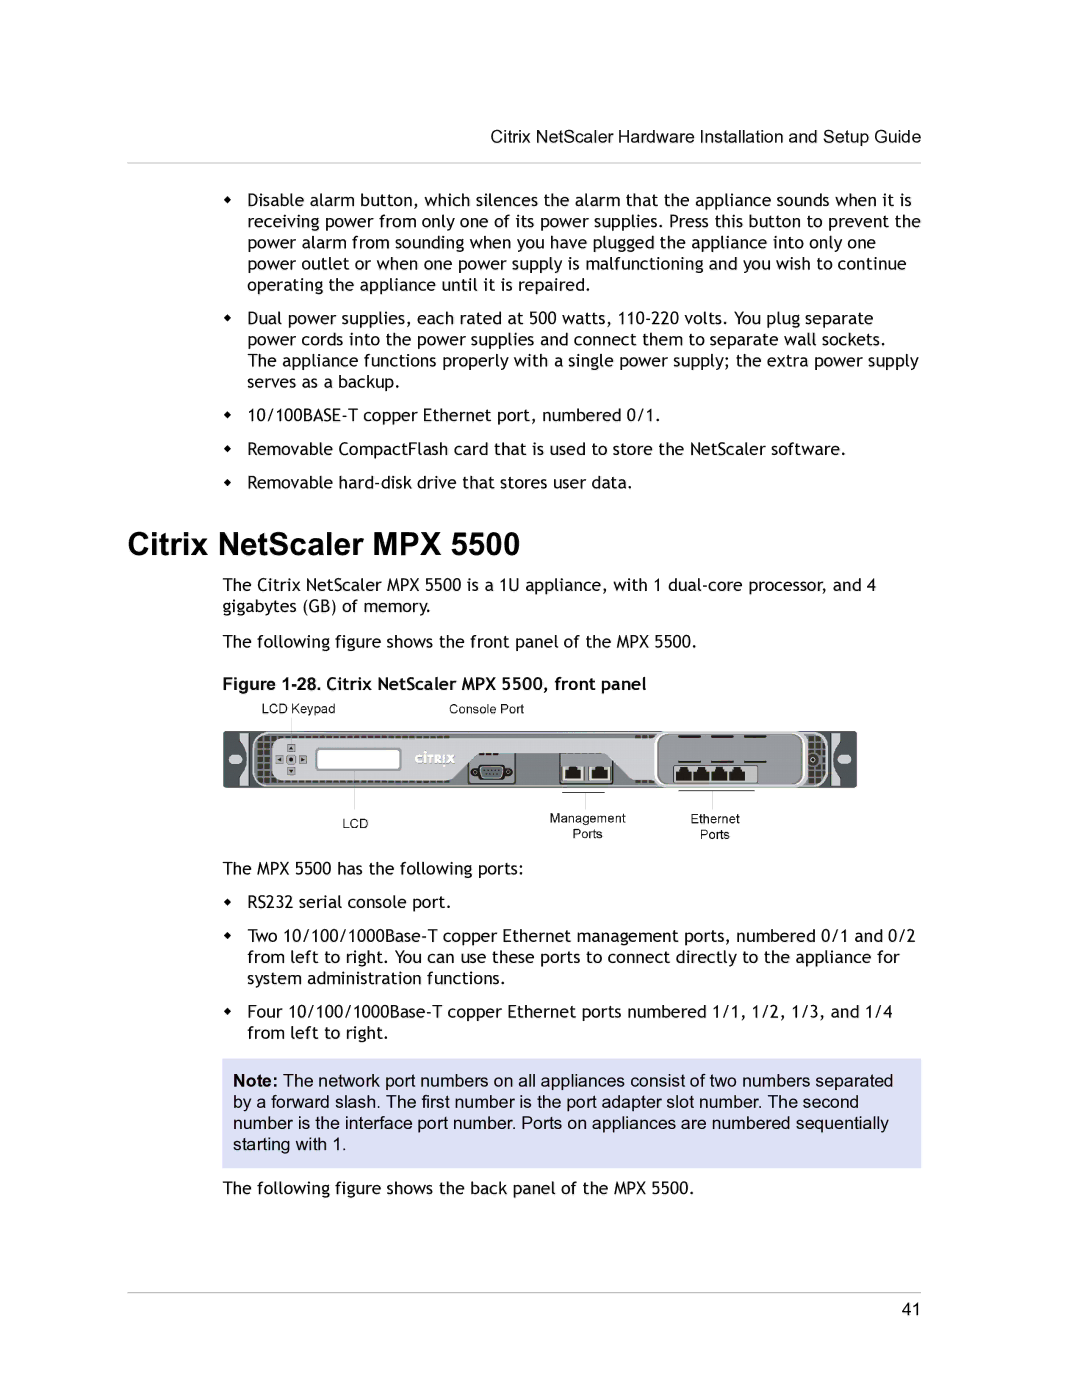 Citrix Systems 9.3 setup guide Citrix NetScaler MPX 5500, front panel 